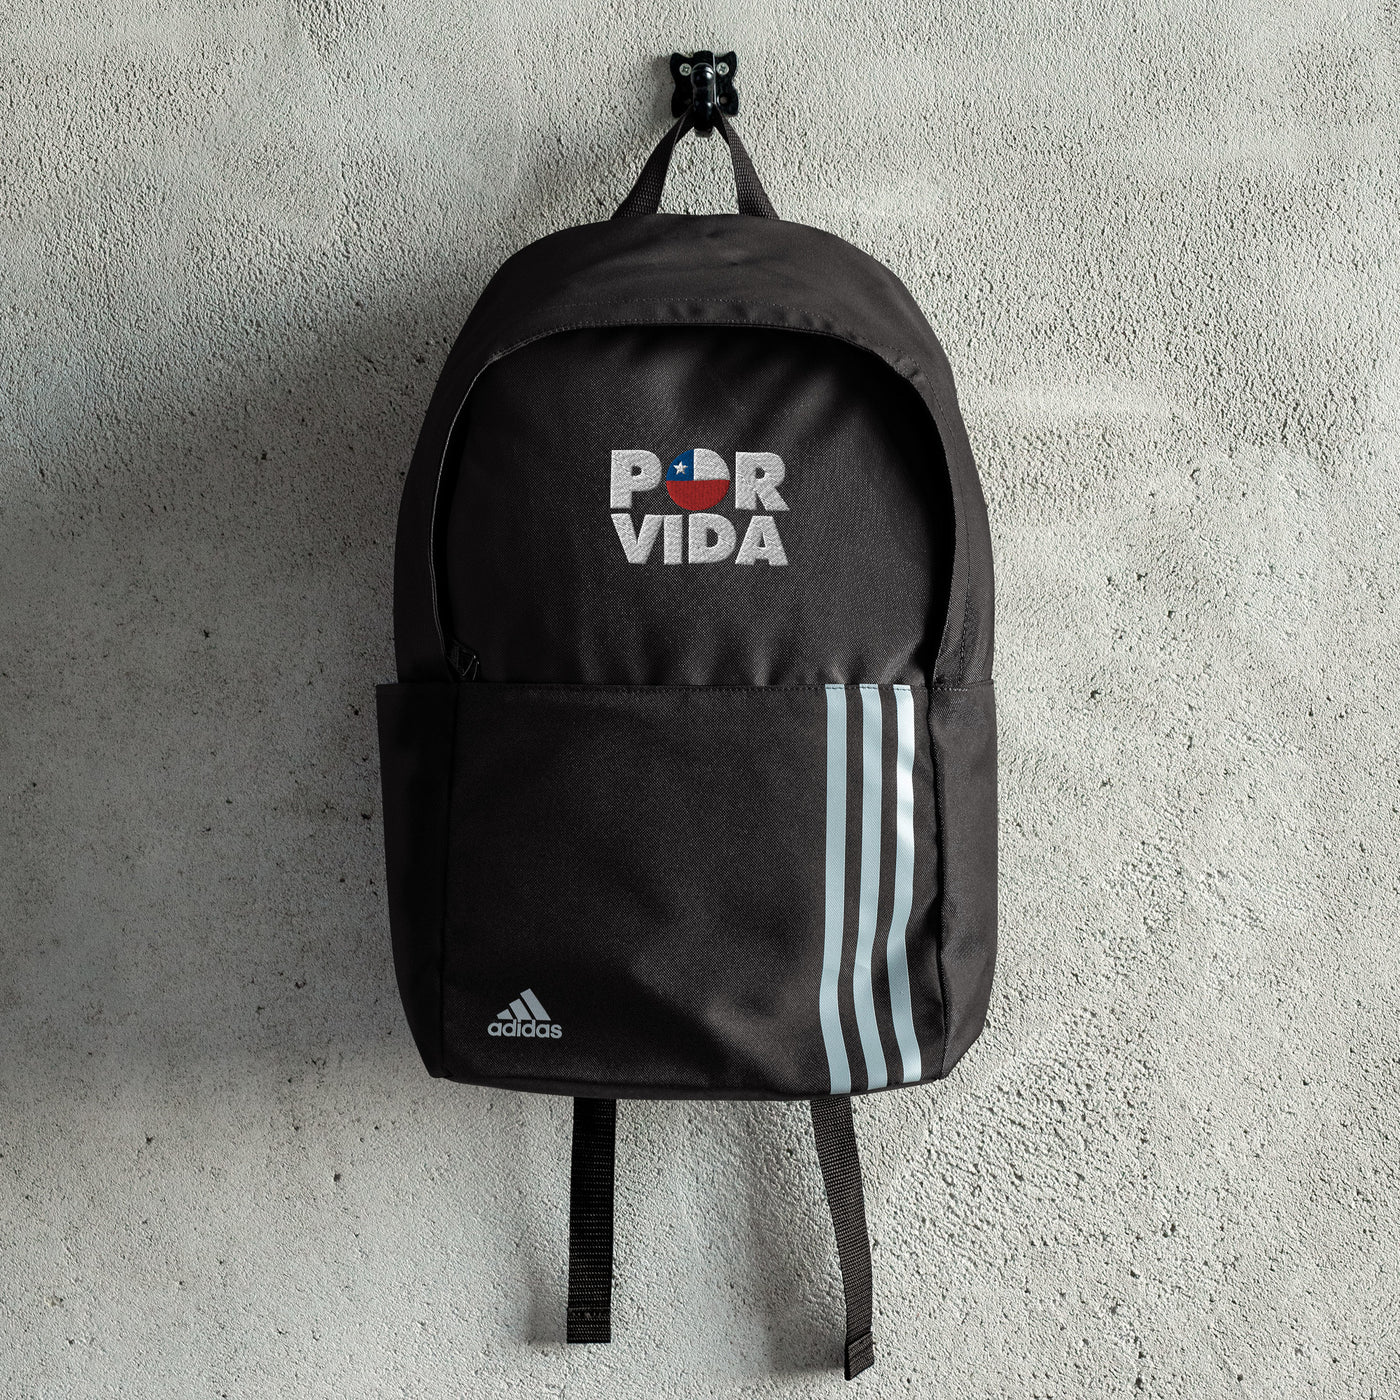 Chile POR VIDA adidas backpack